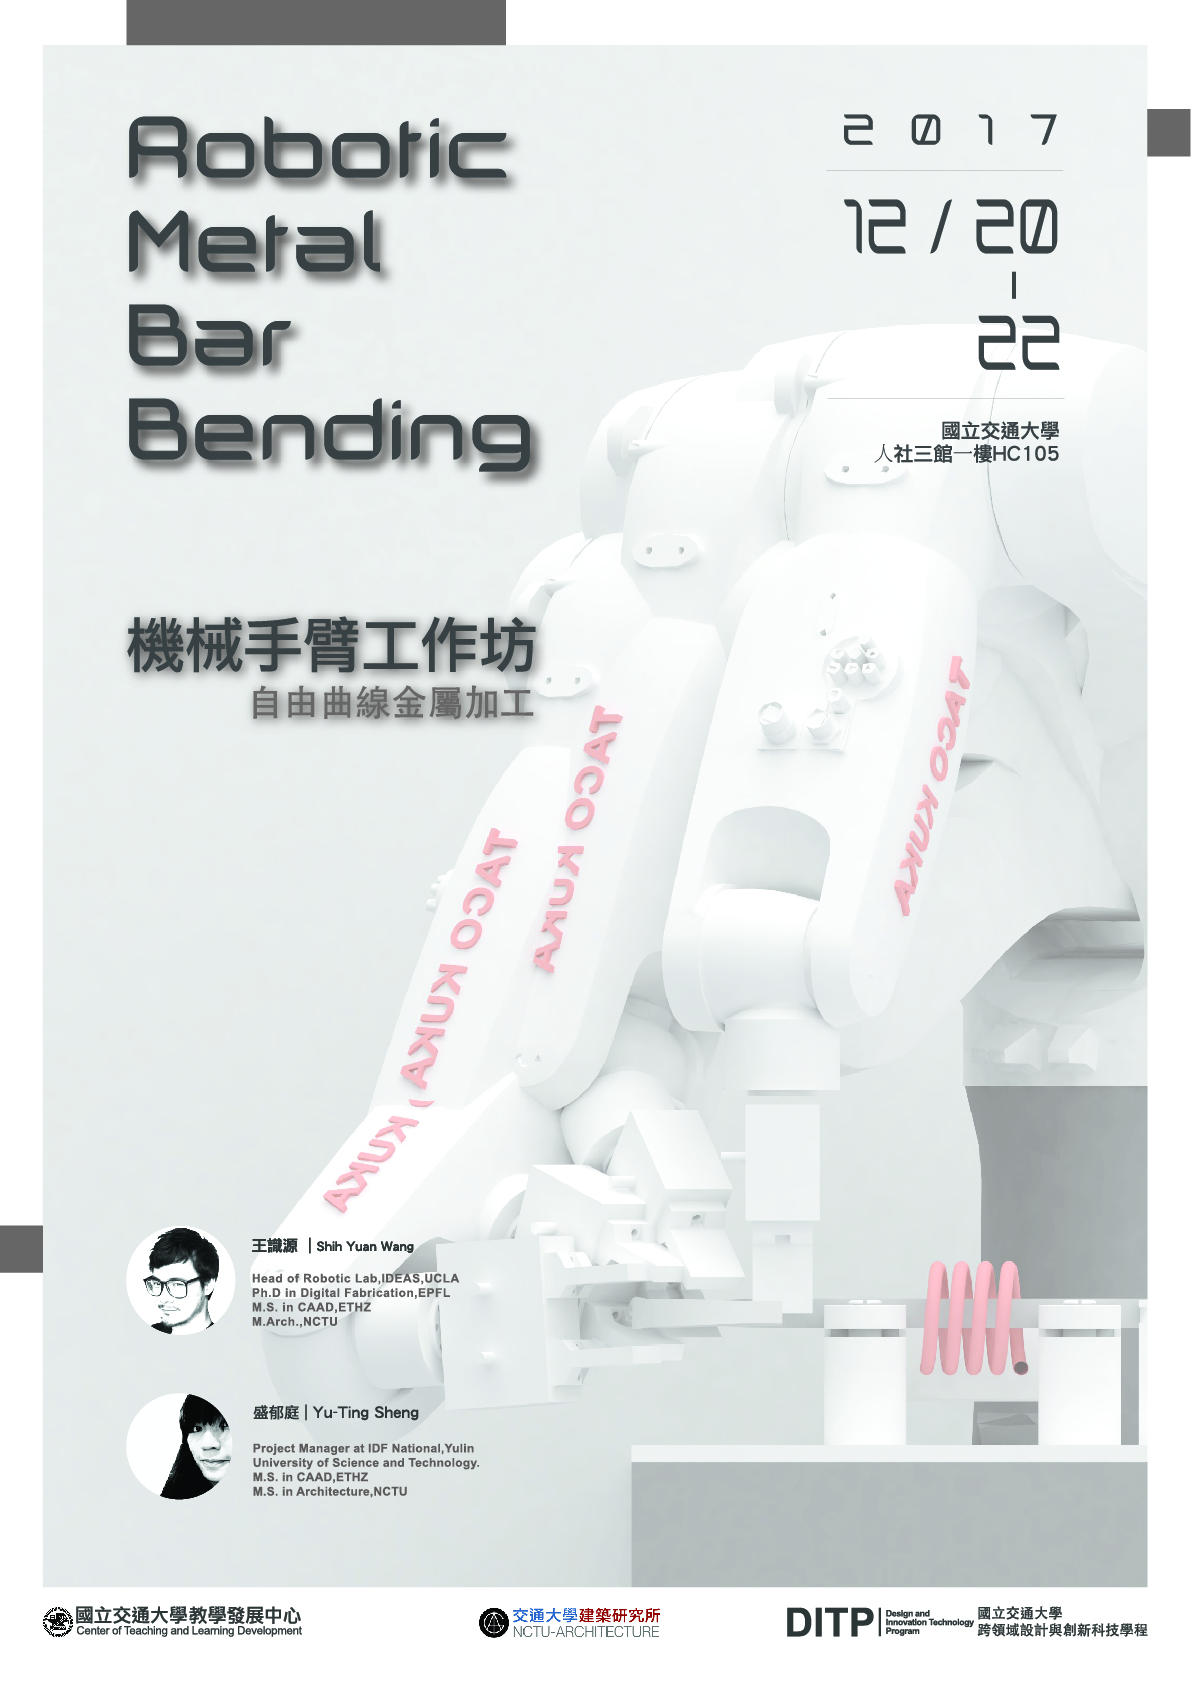 Robotic metal bar bending workshop